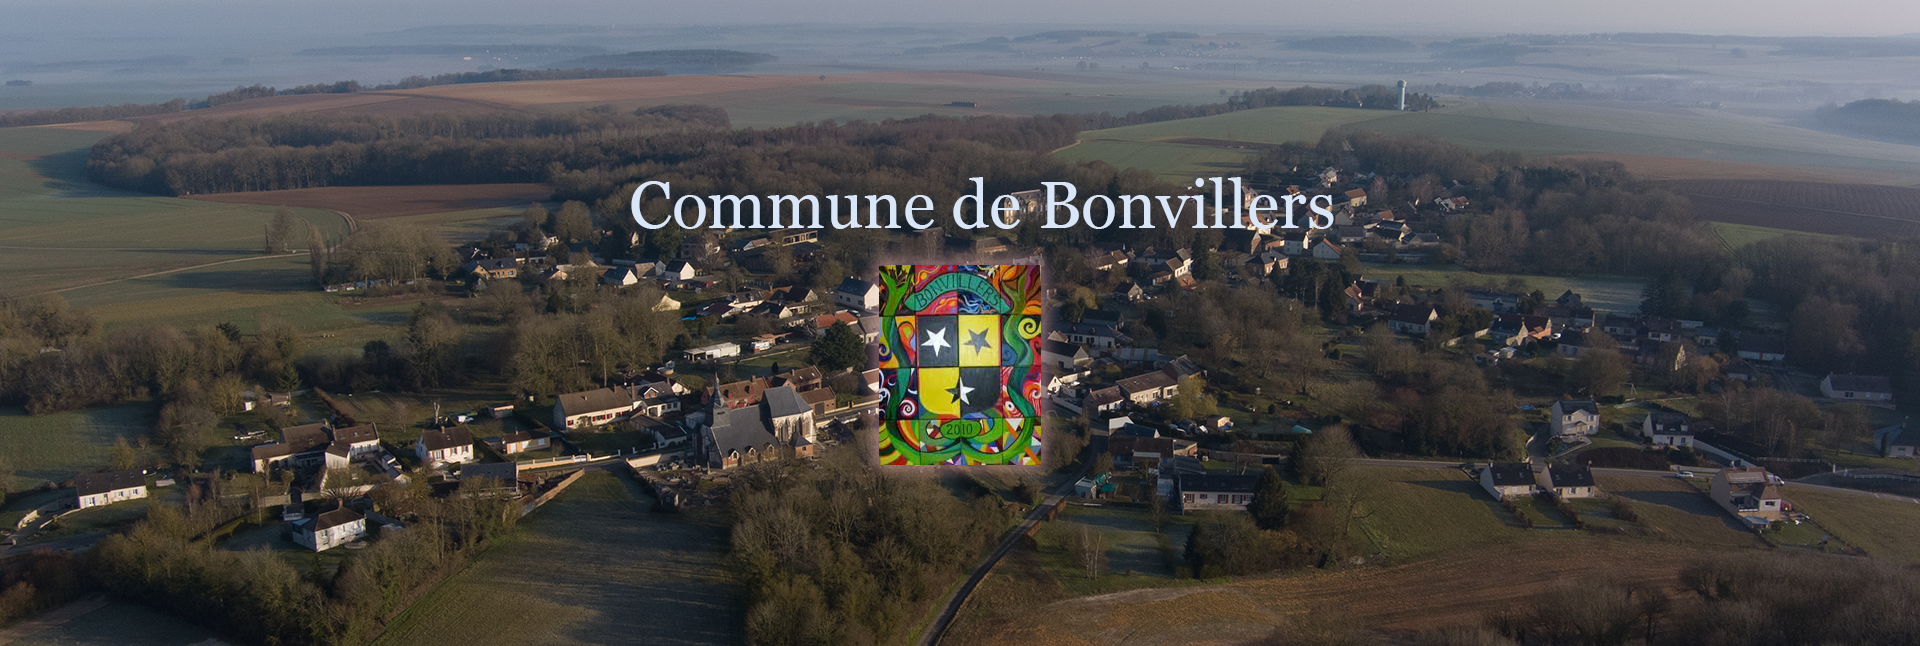 Commune de Bonvillers